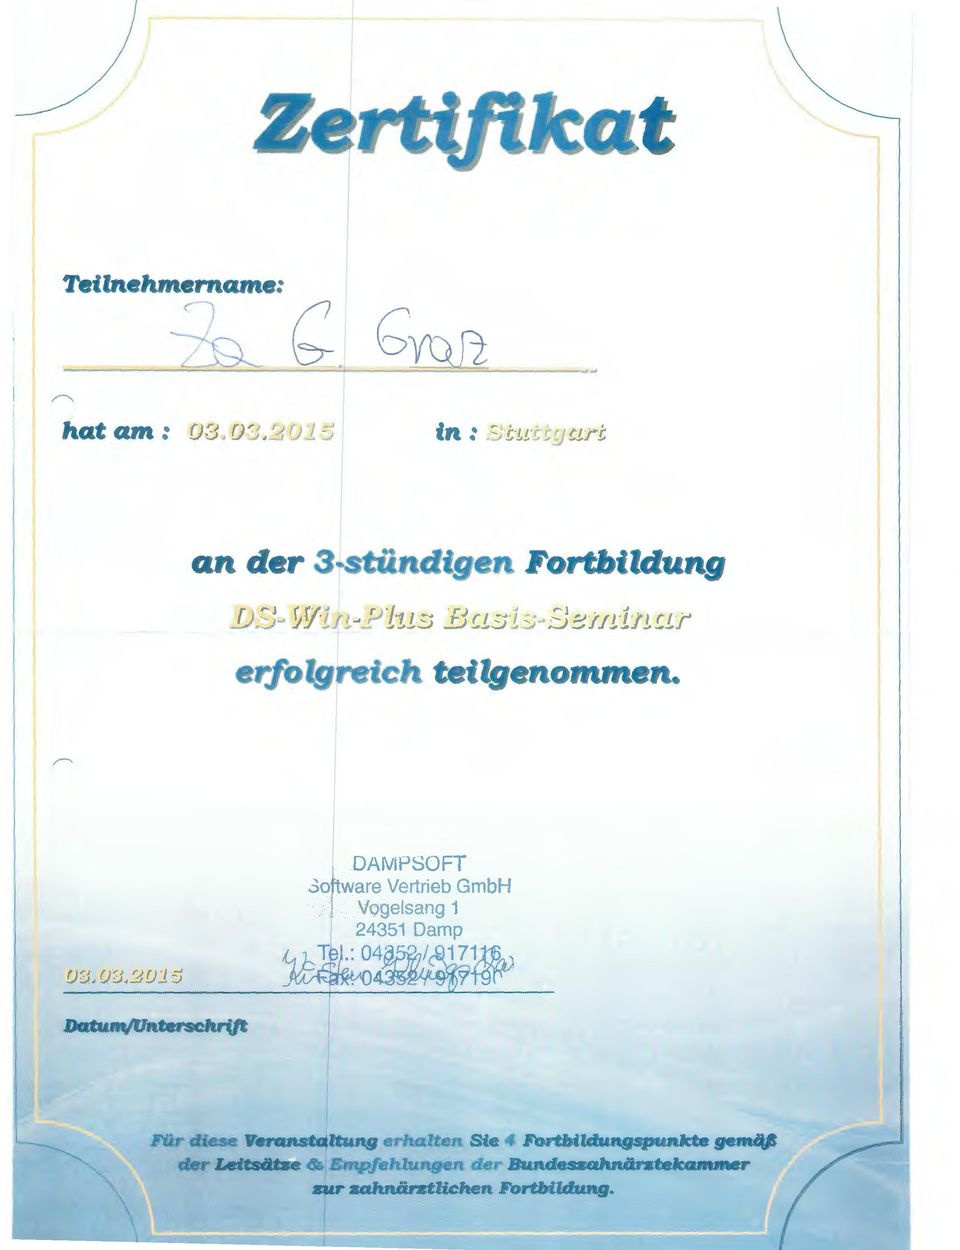 3o~ware Vertrieb GmbH Vogelsang 1 1 24351 Damp ~-~ Nr cffese V.